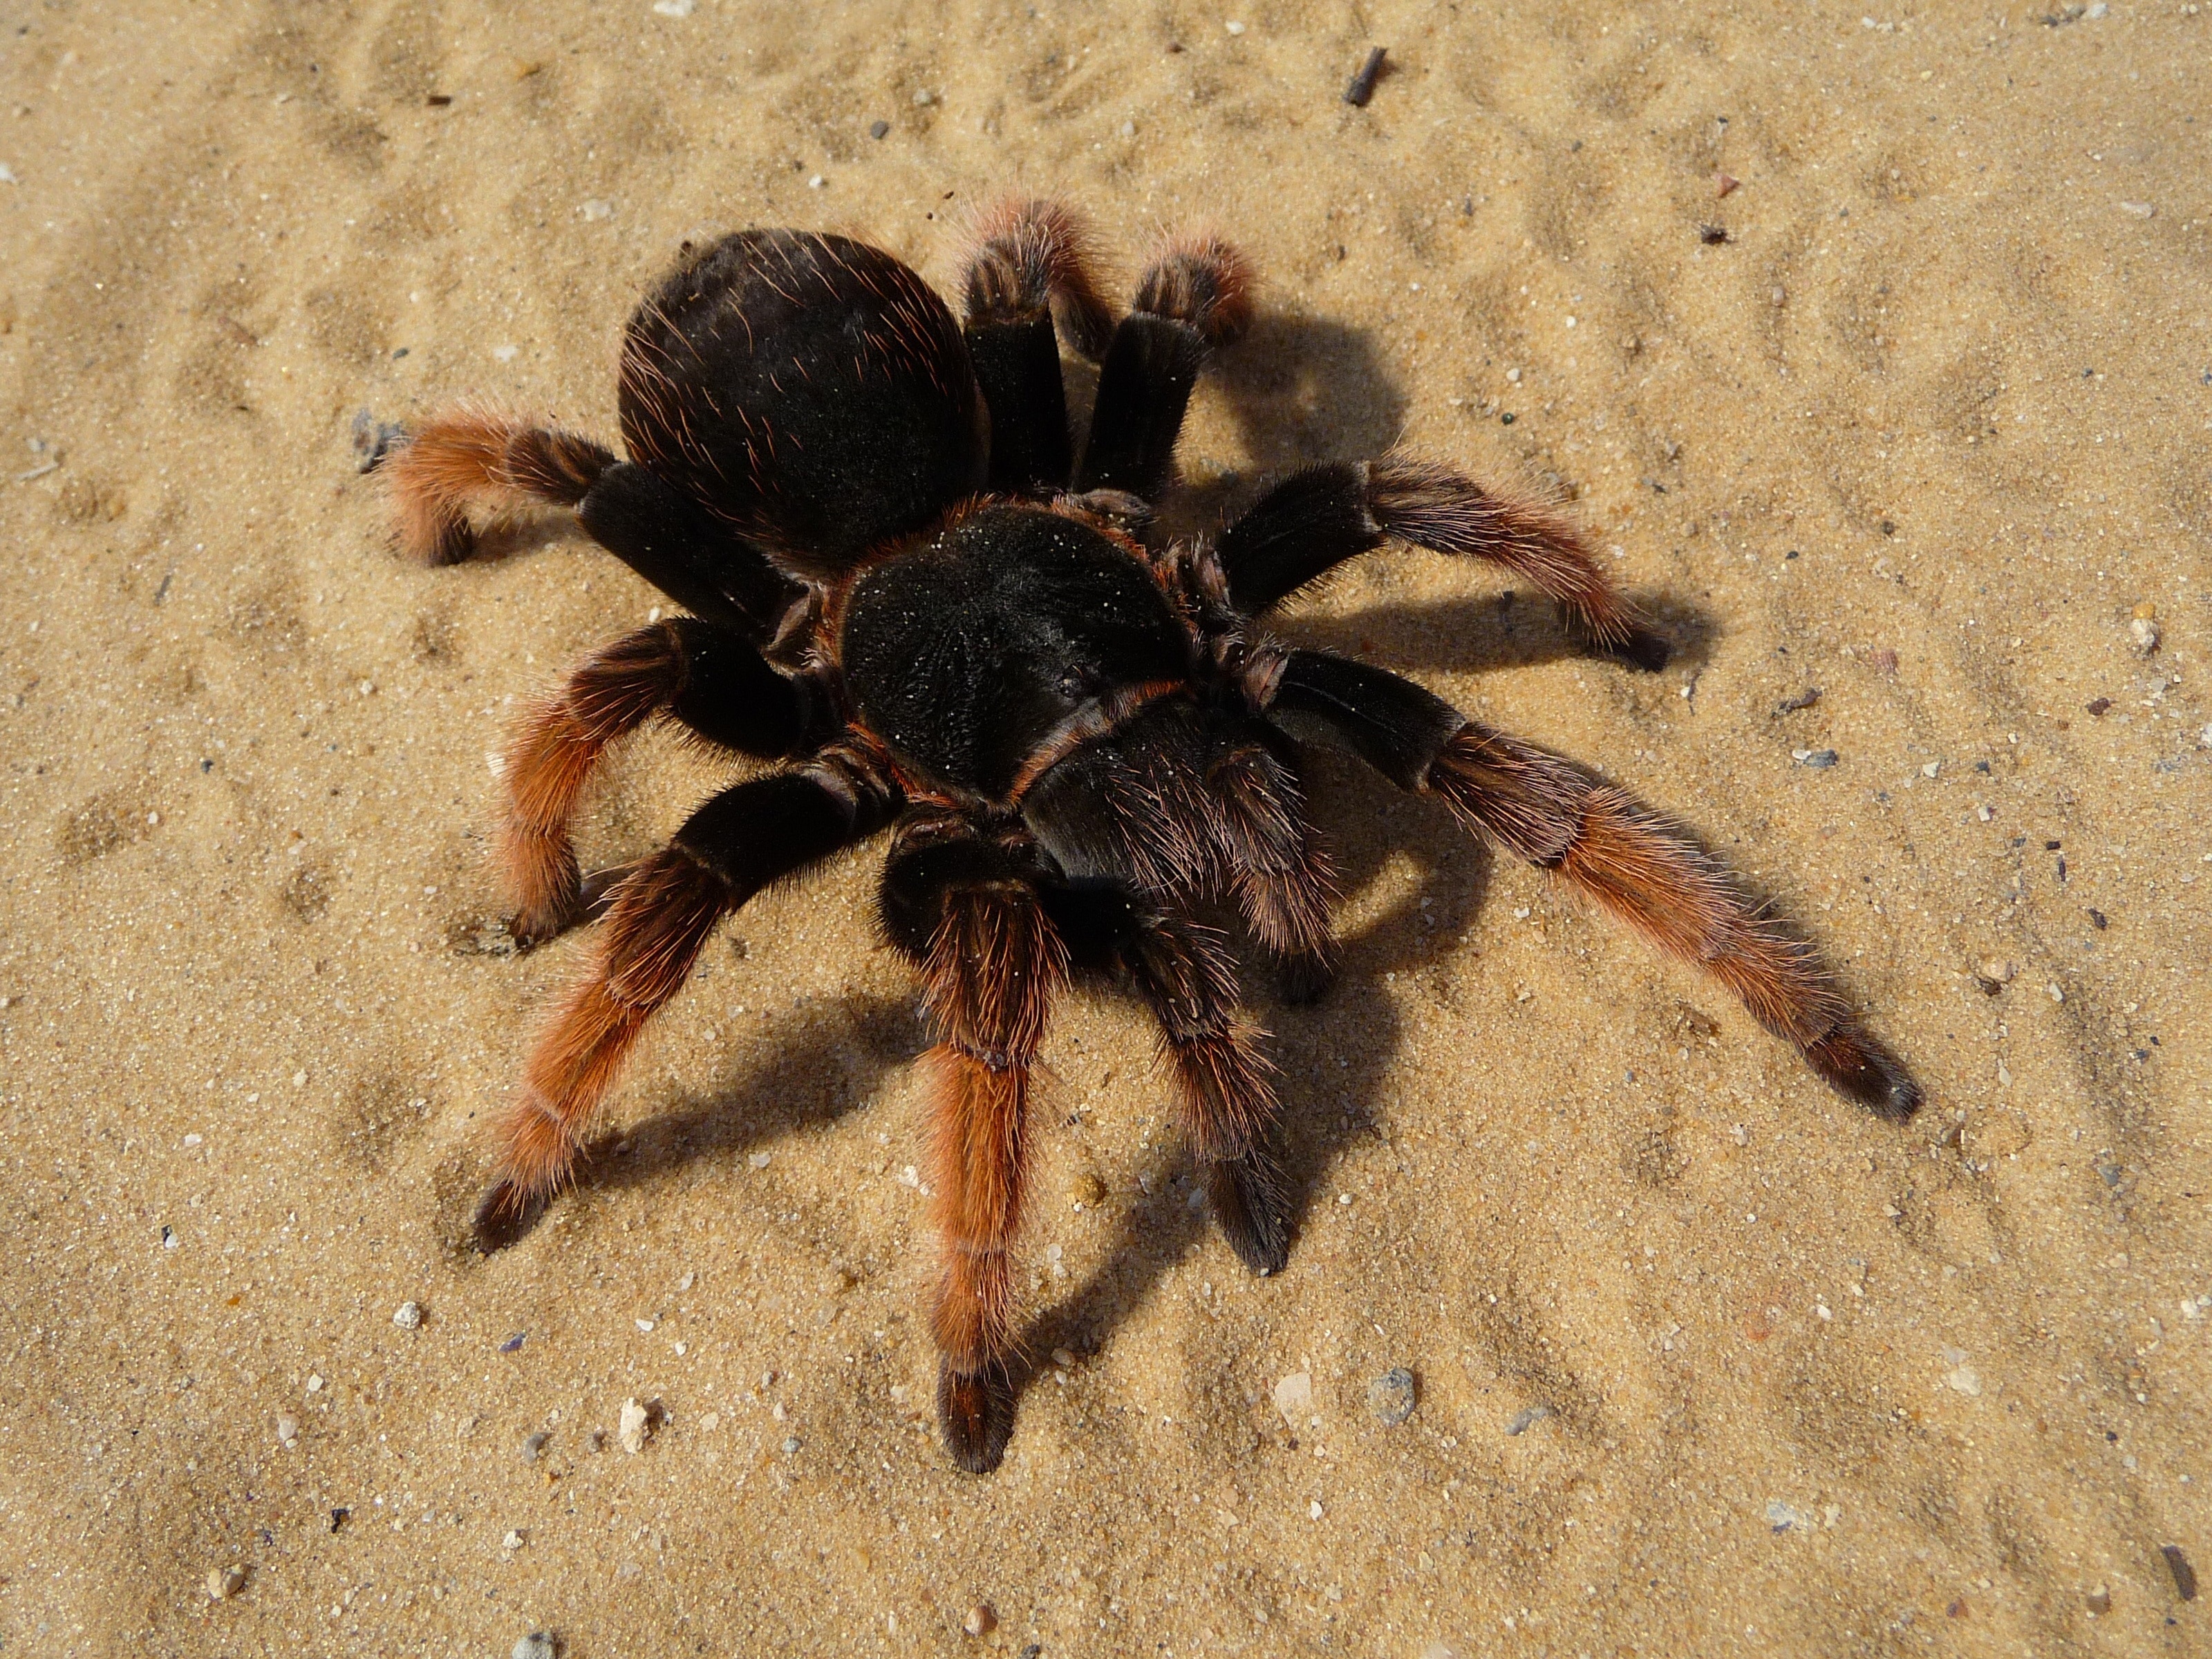 tarantula on sand during daytime